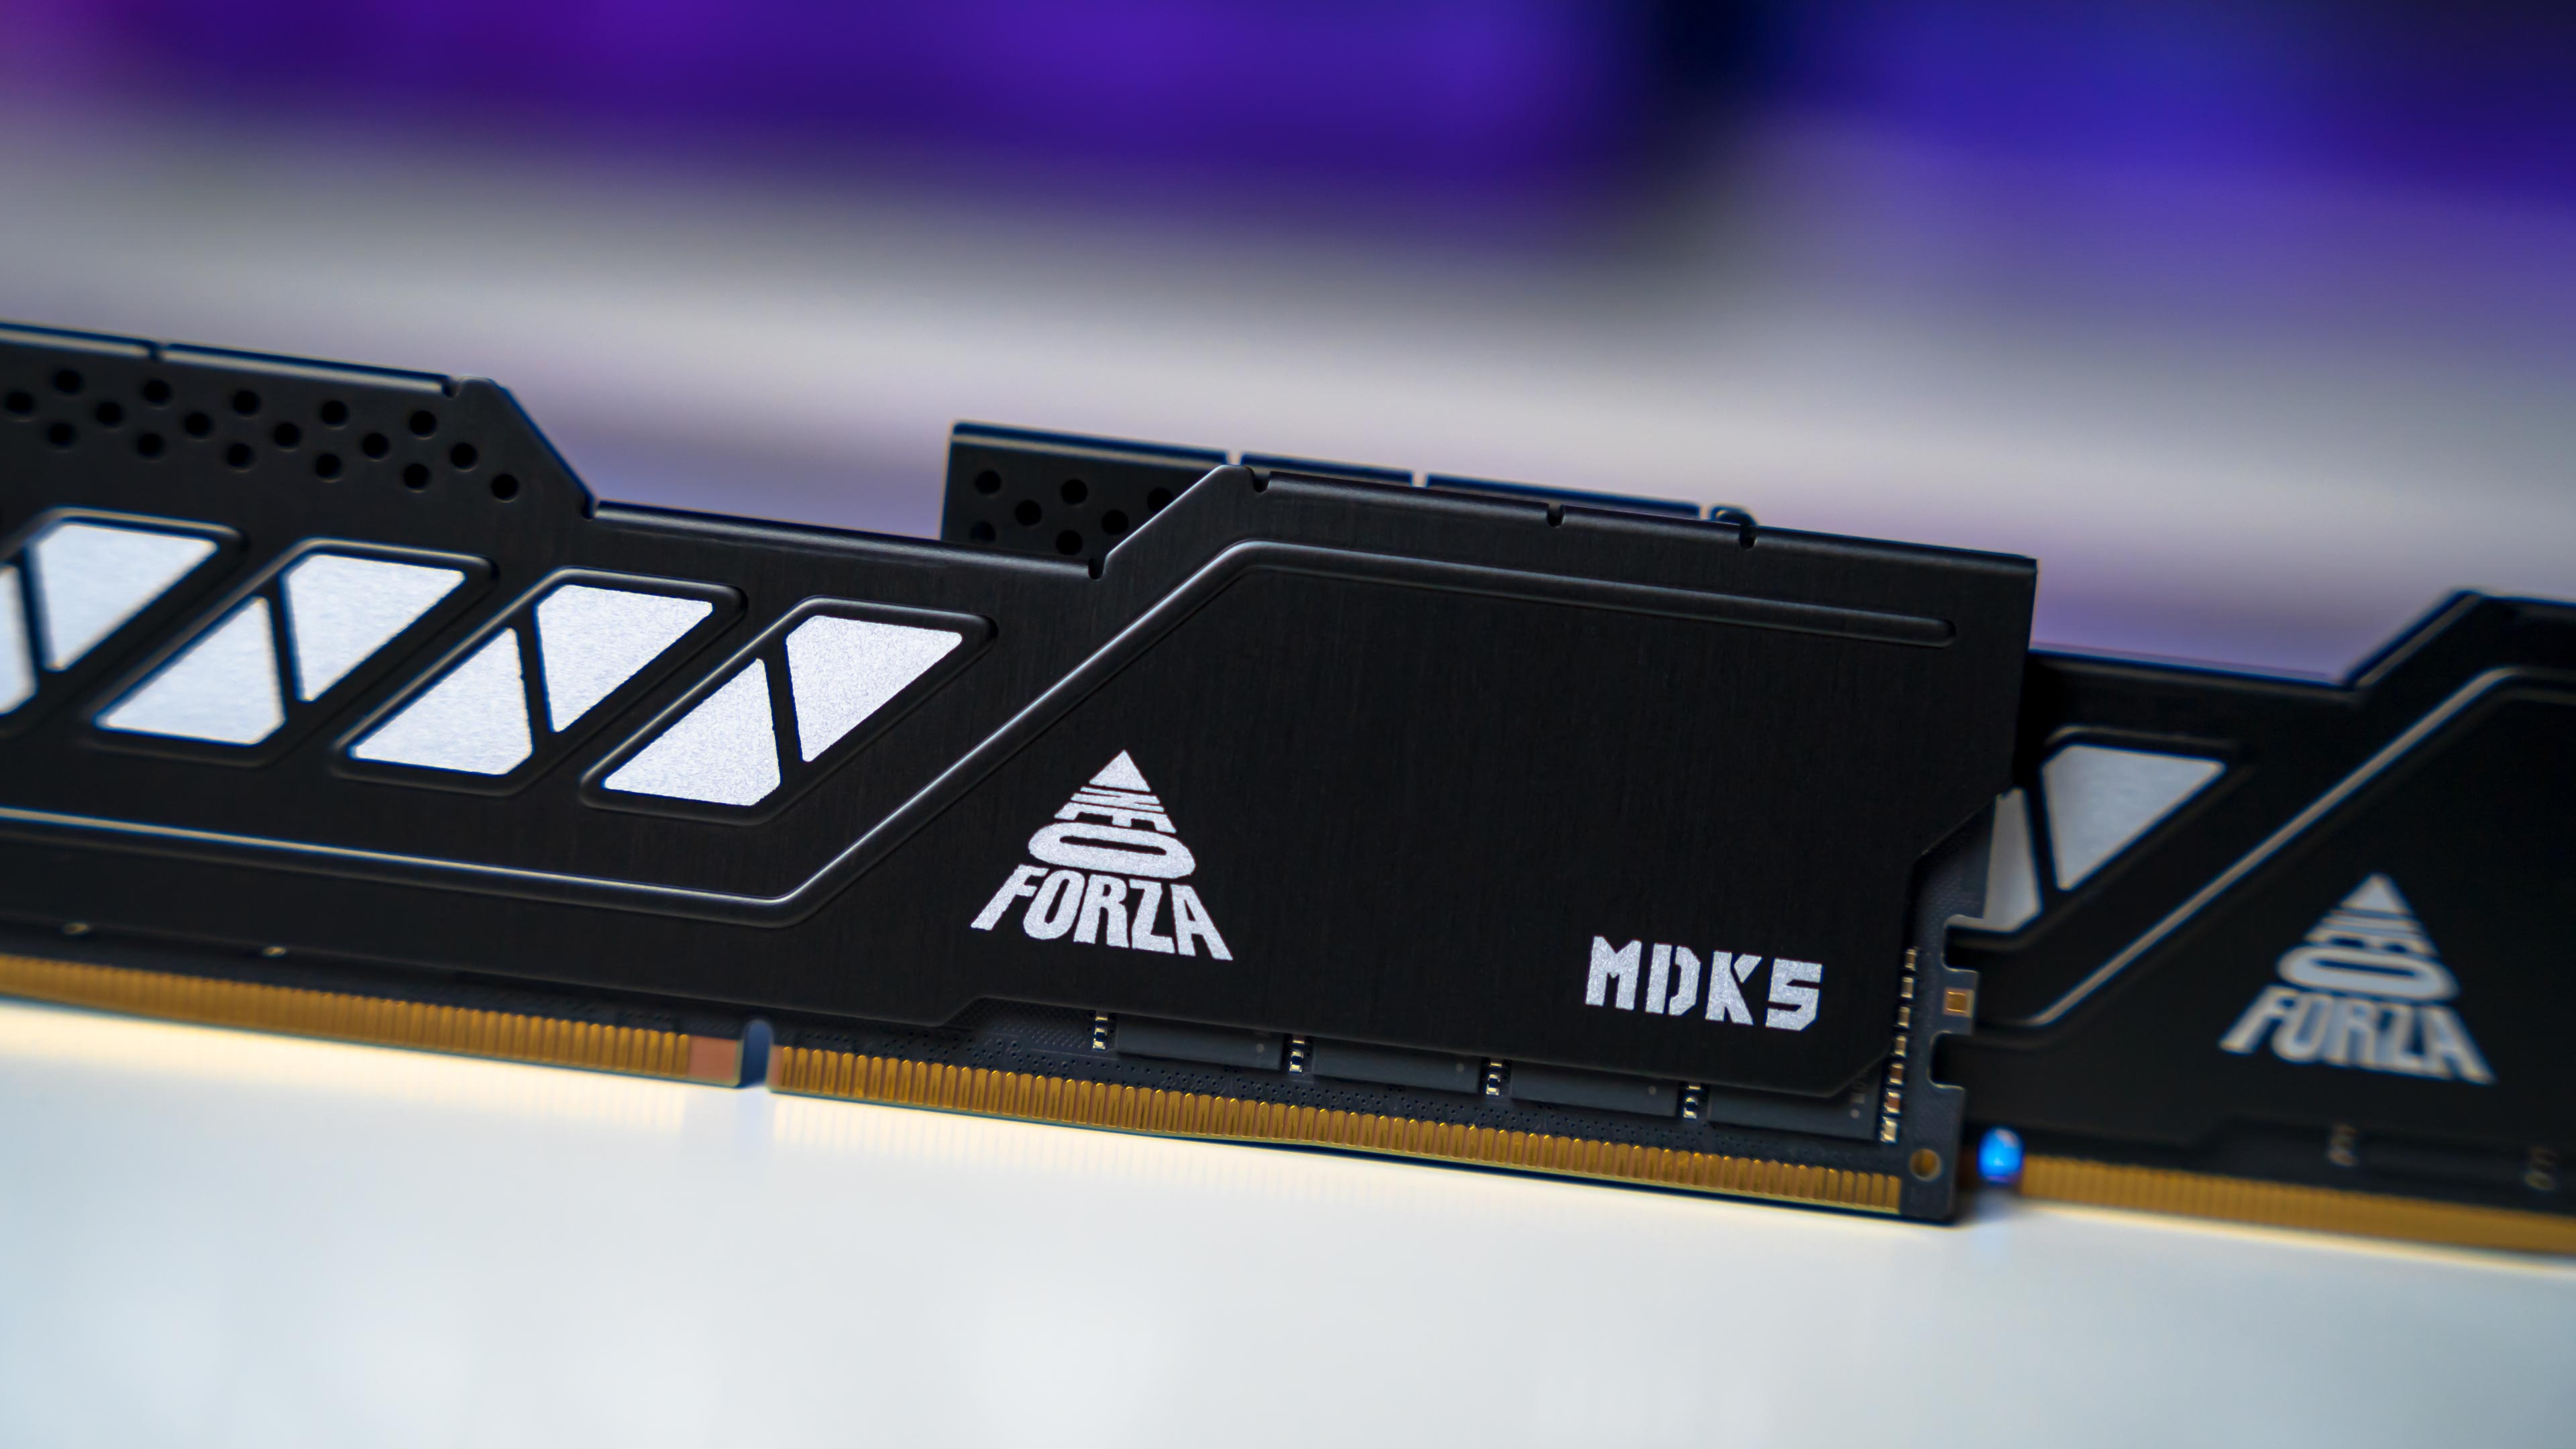 Neo Forza MDK5 DDR5 6000MHz Memory (6)